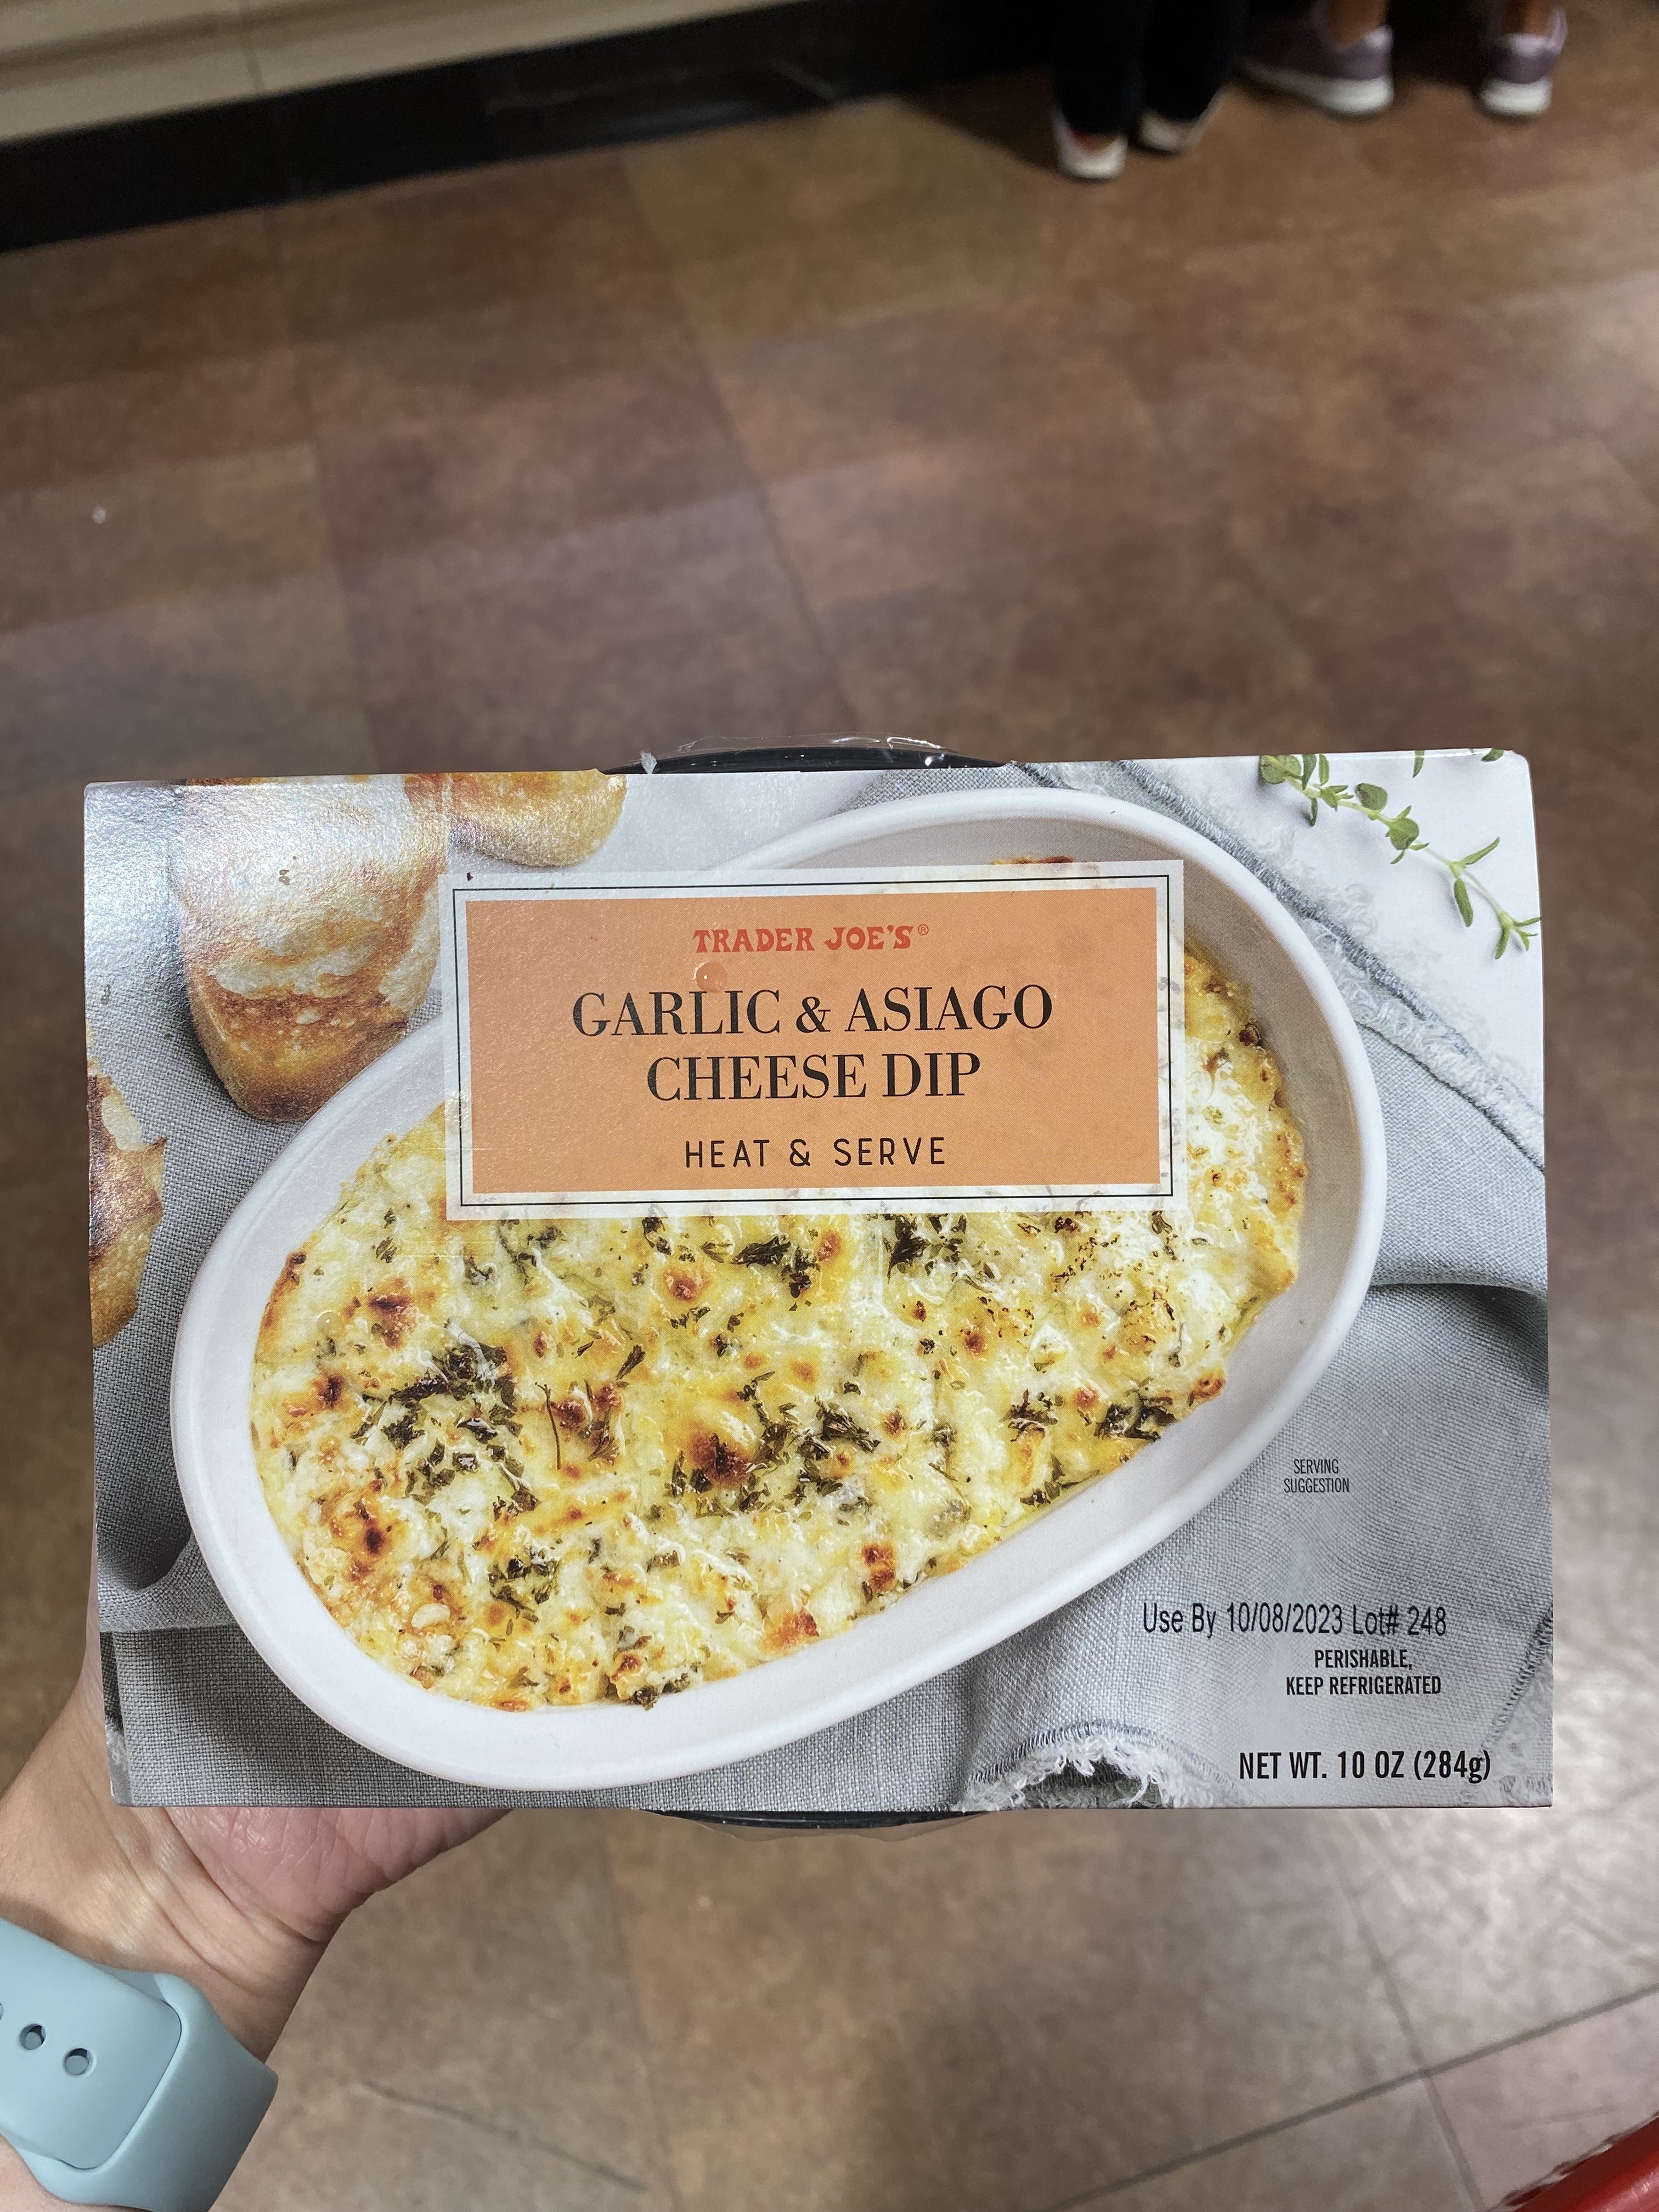 A box of garlic and asiago cheese dip